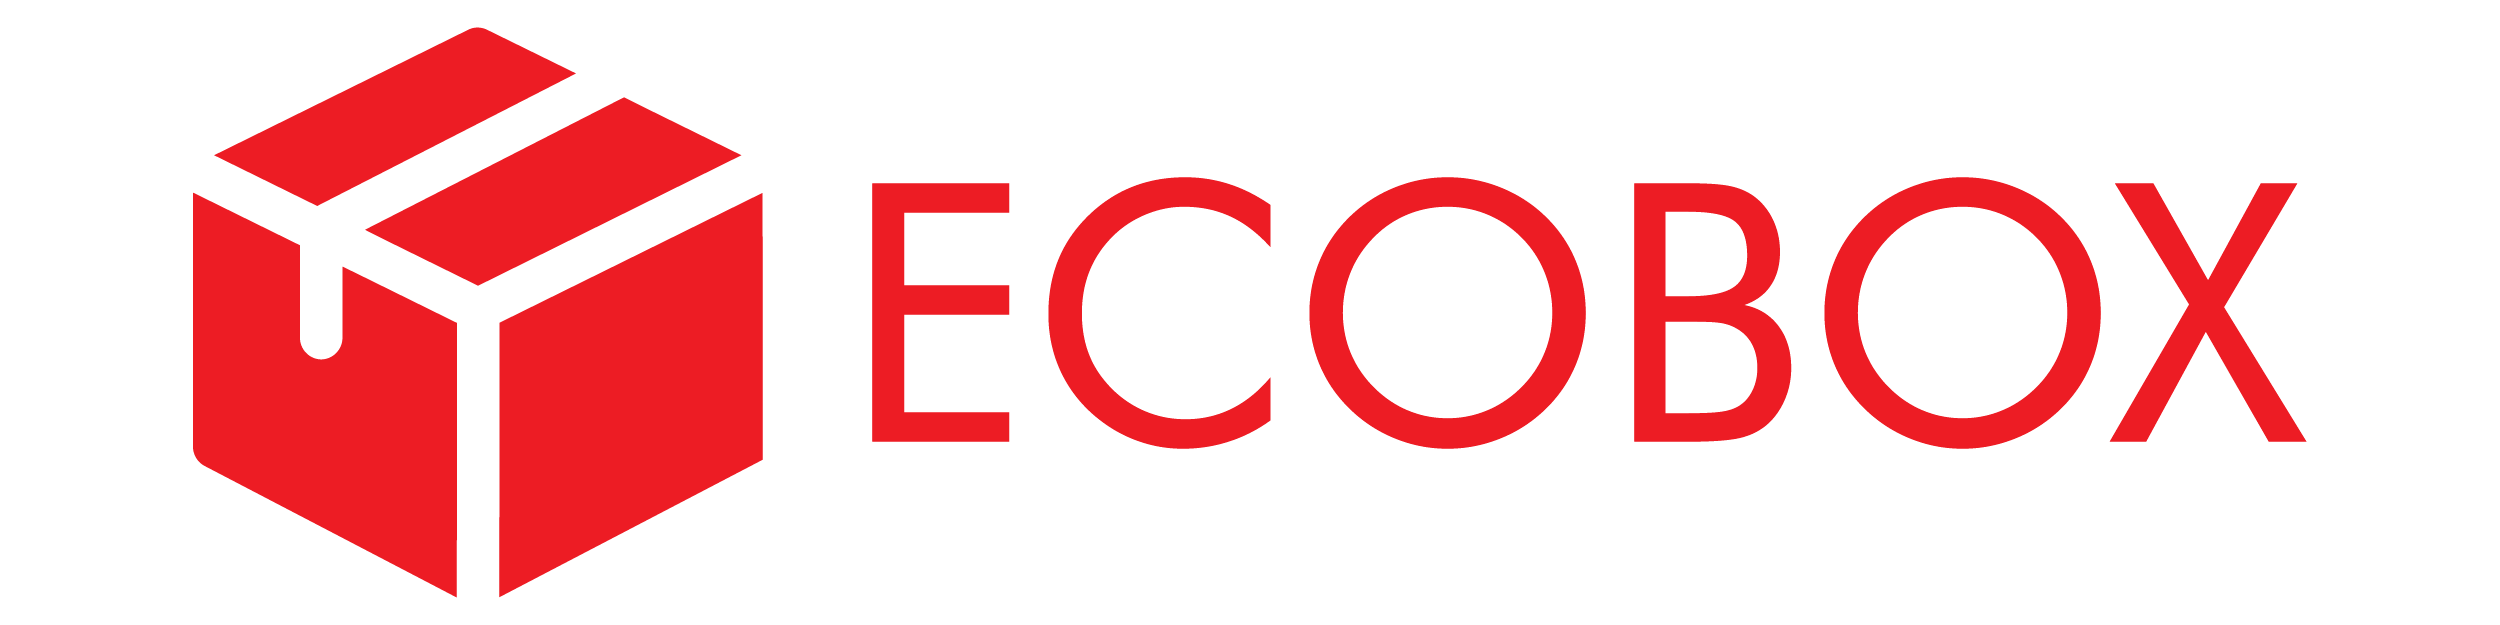 Ecobox.vn